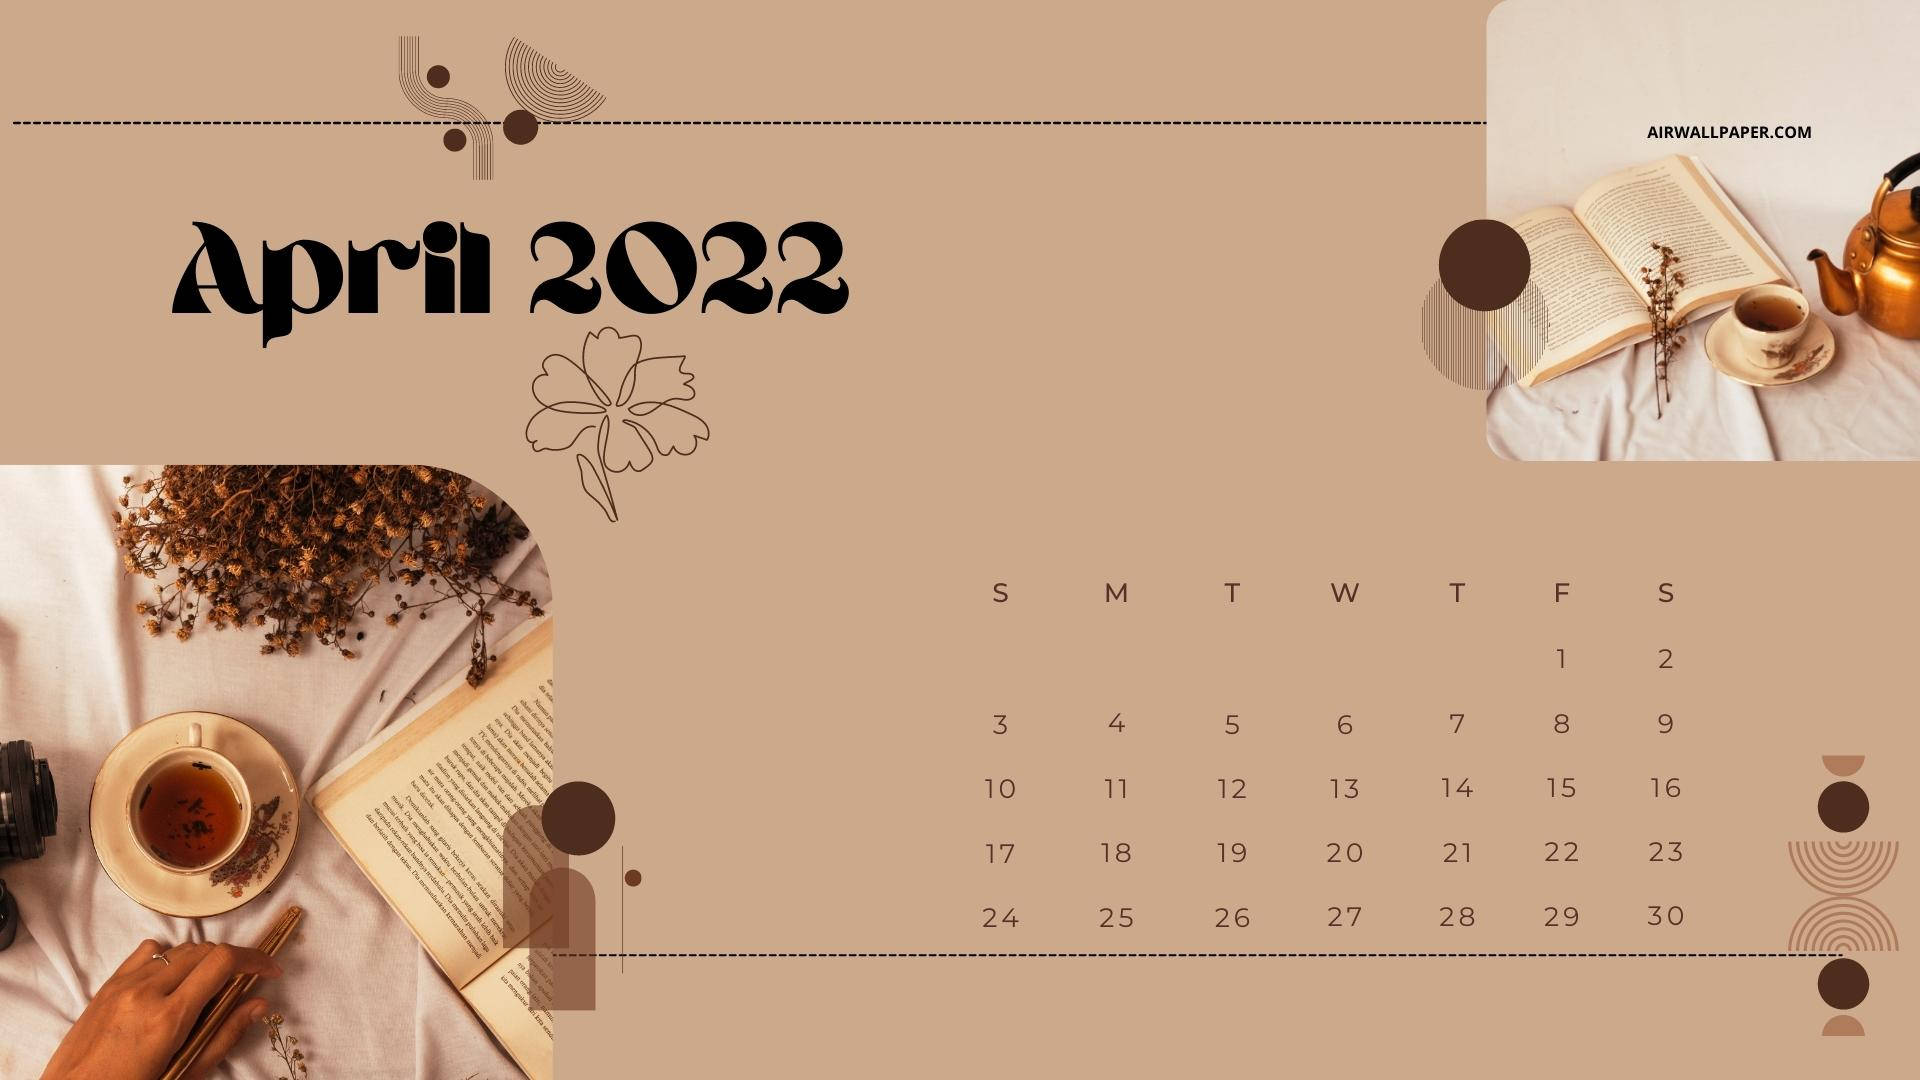 Fall Theme April 2022 Calendar Background